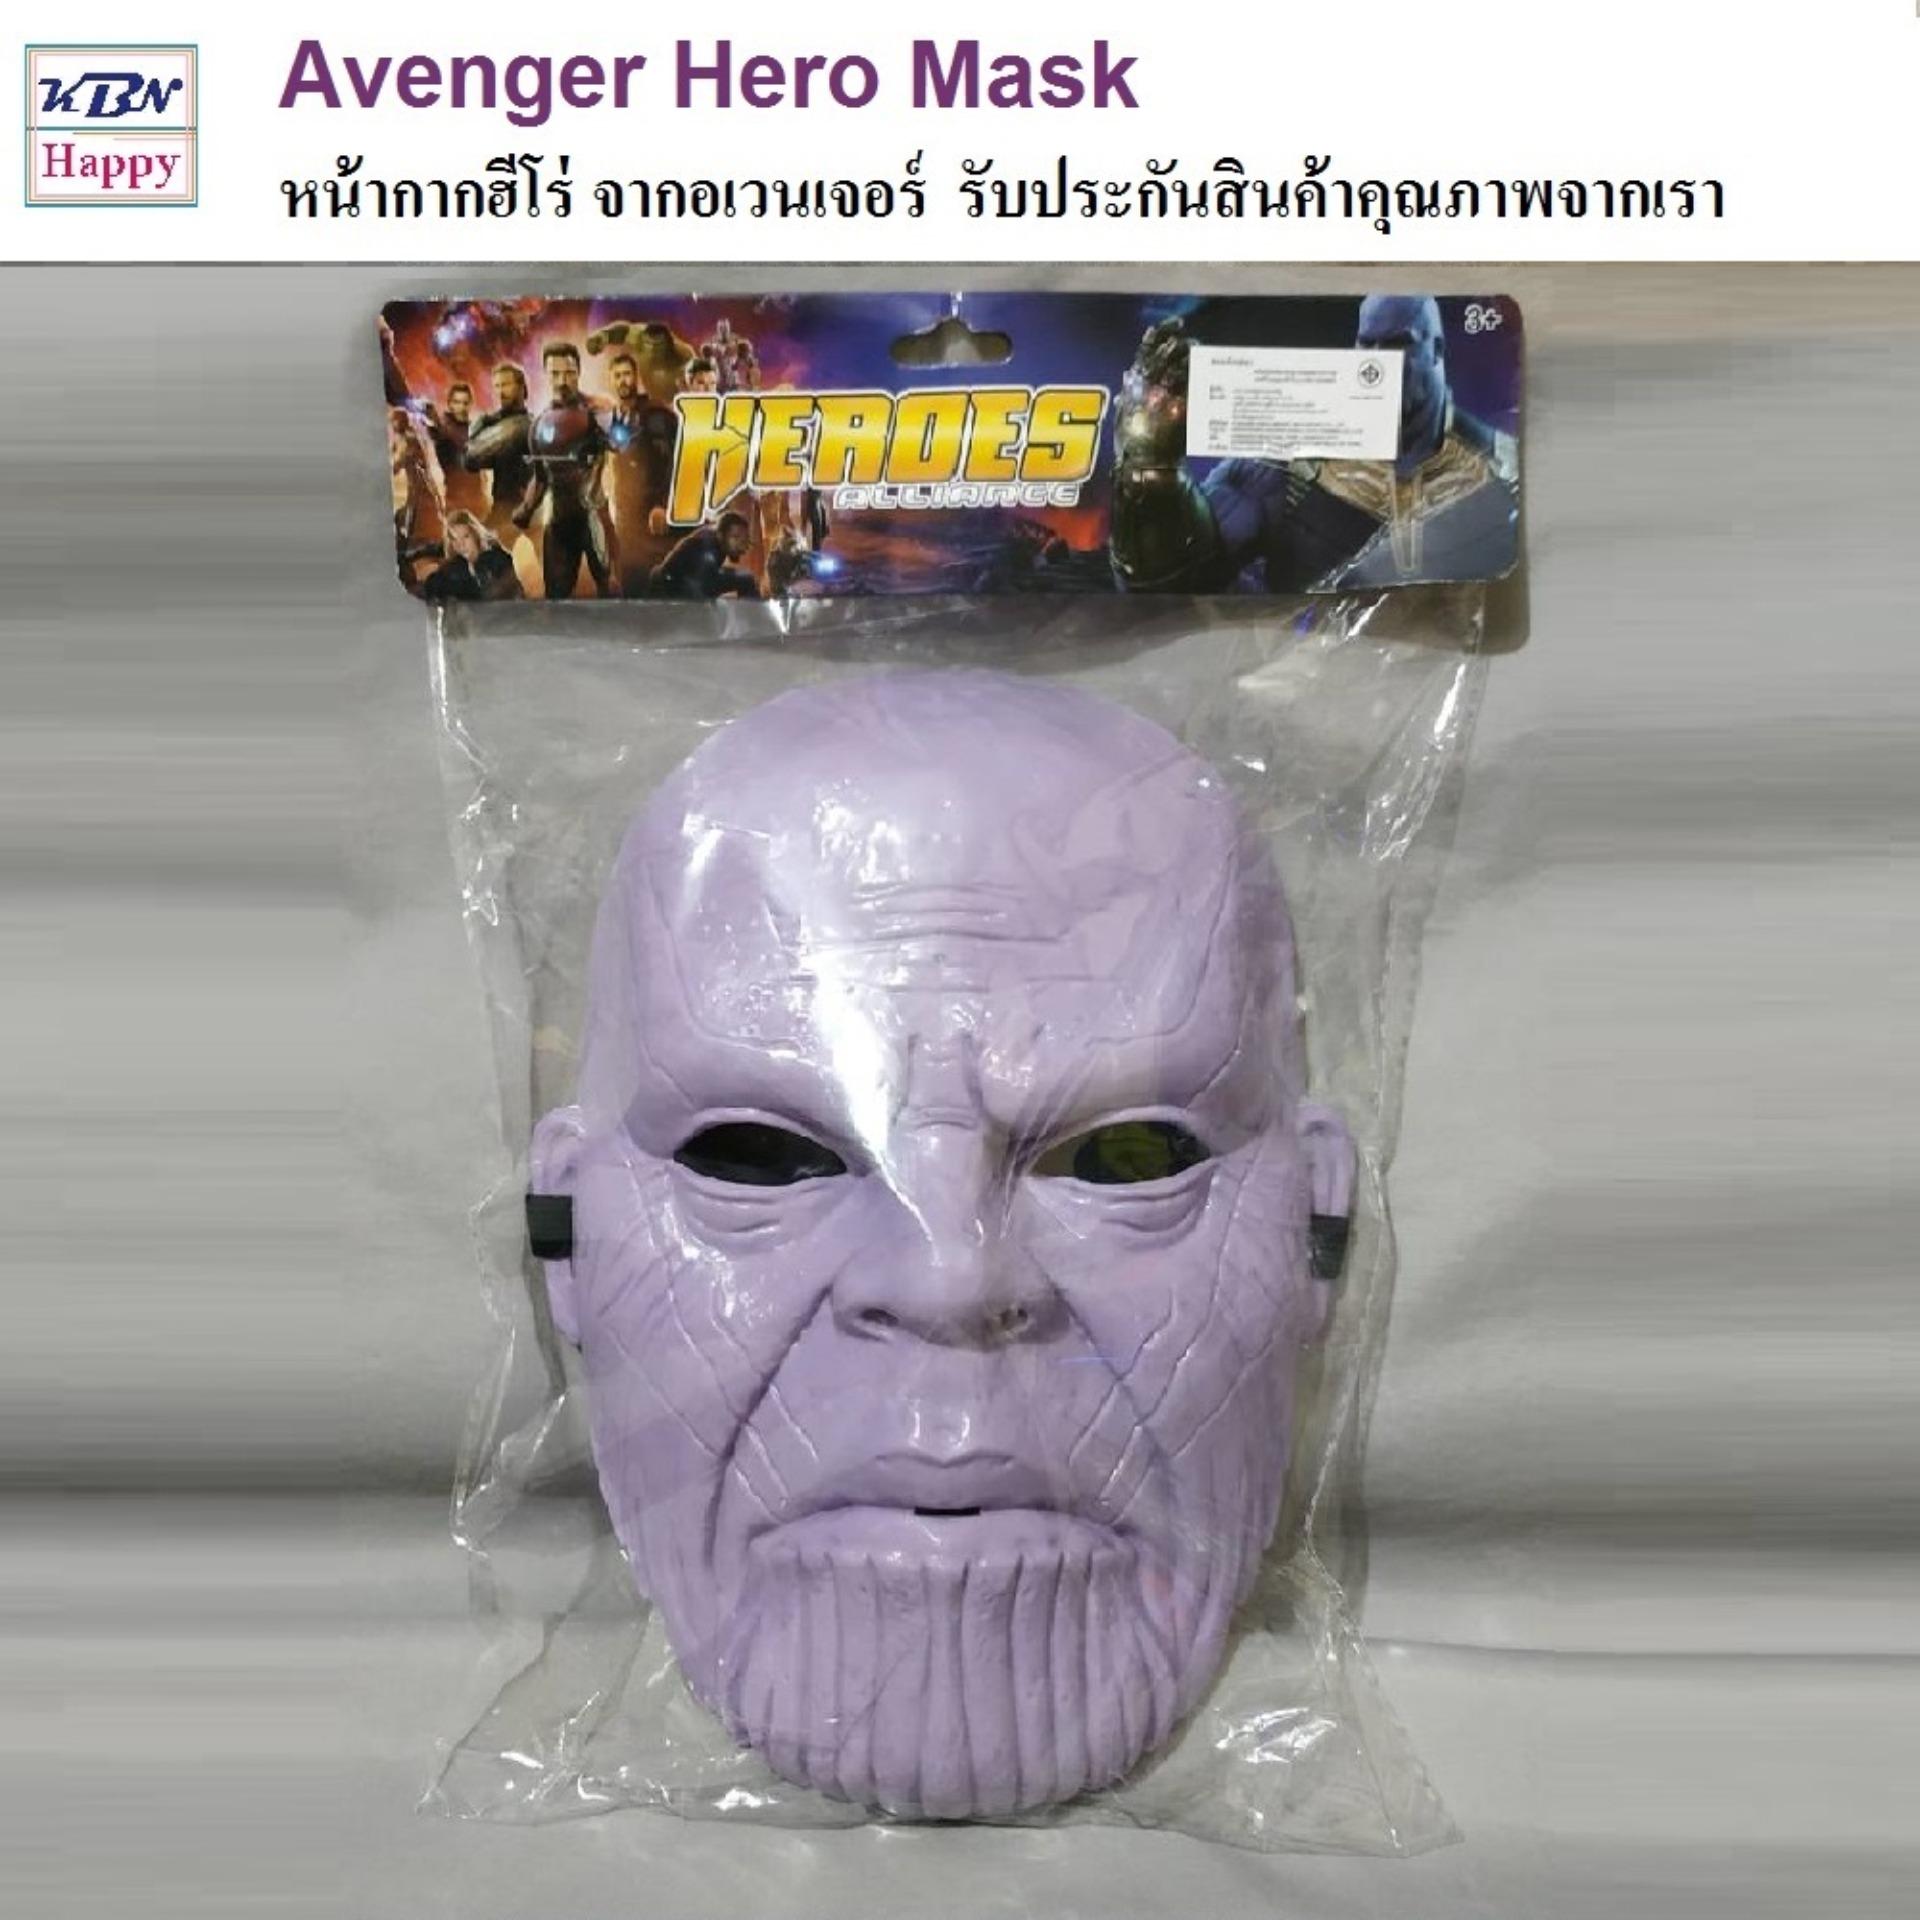 Avenger Hero Mask หน้ากากฮีโร่ ทีมอเวนเจอร์ รุ่นมีไฟ หน้ากาก ธานอส Thanos Mask